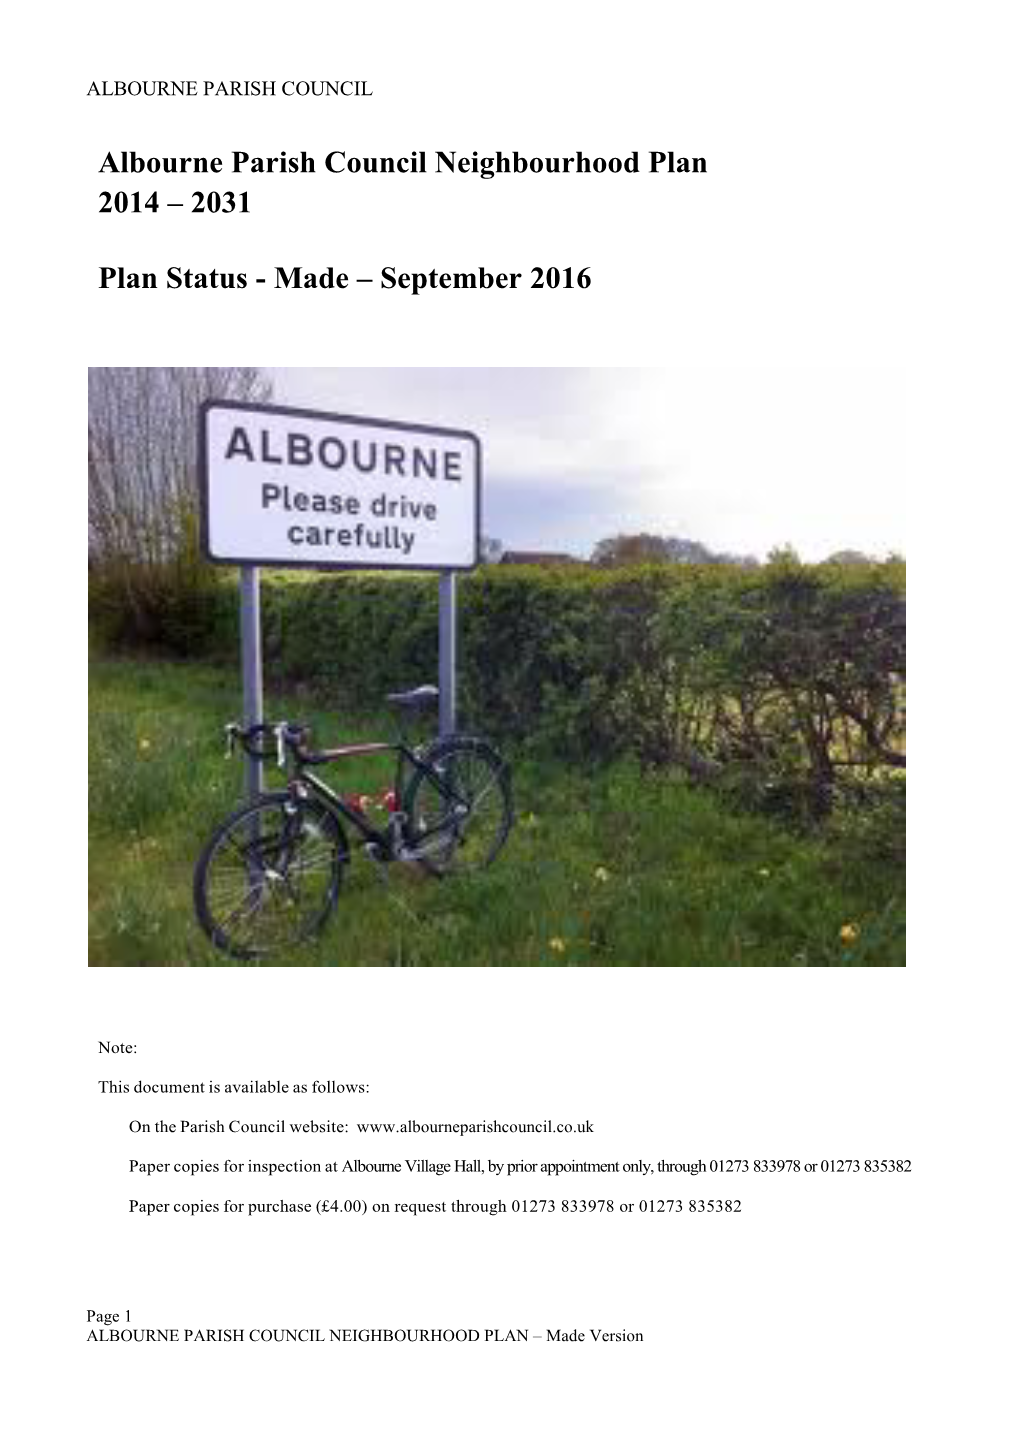 Albourne Parish Neighbourhood Plan